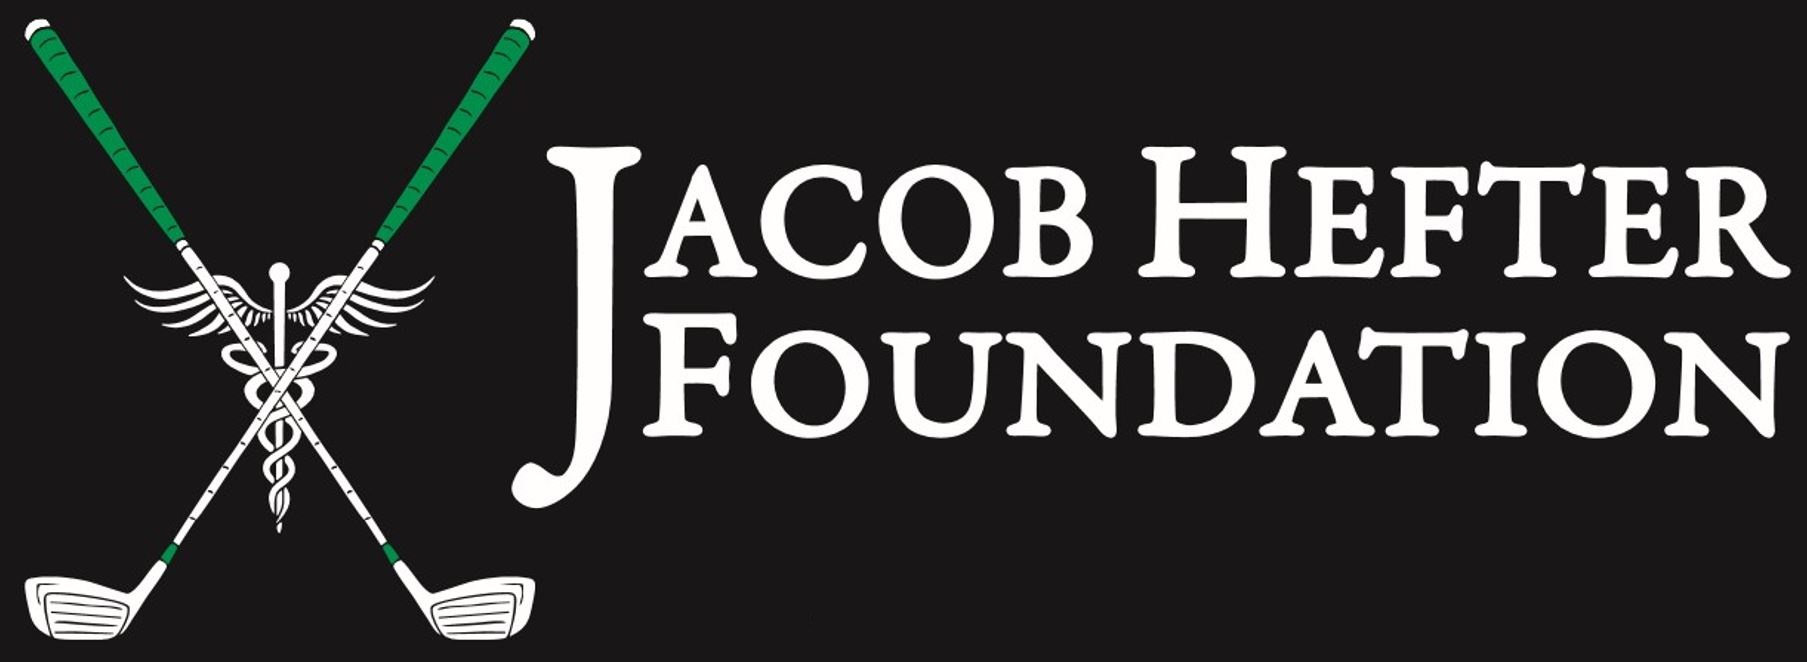 Jacob Hefter Foundation